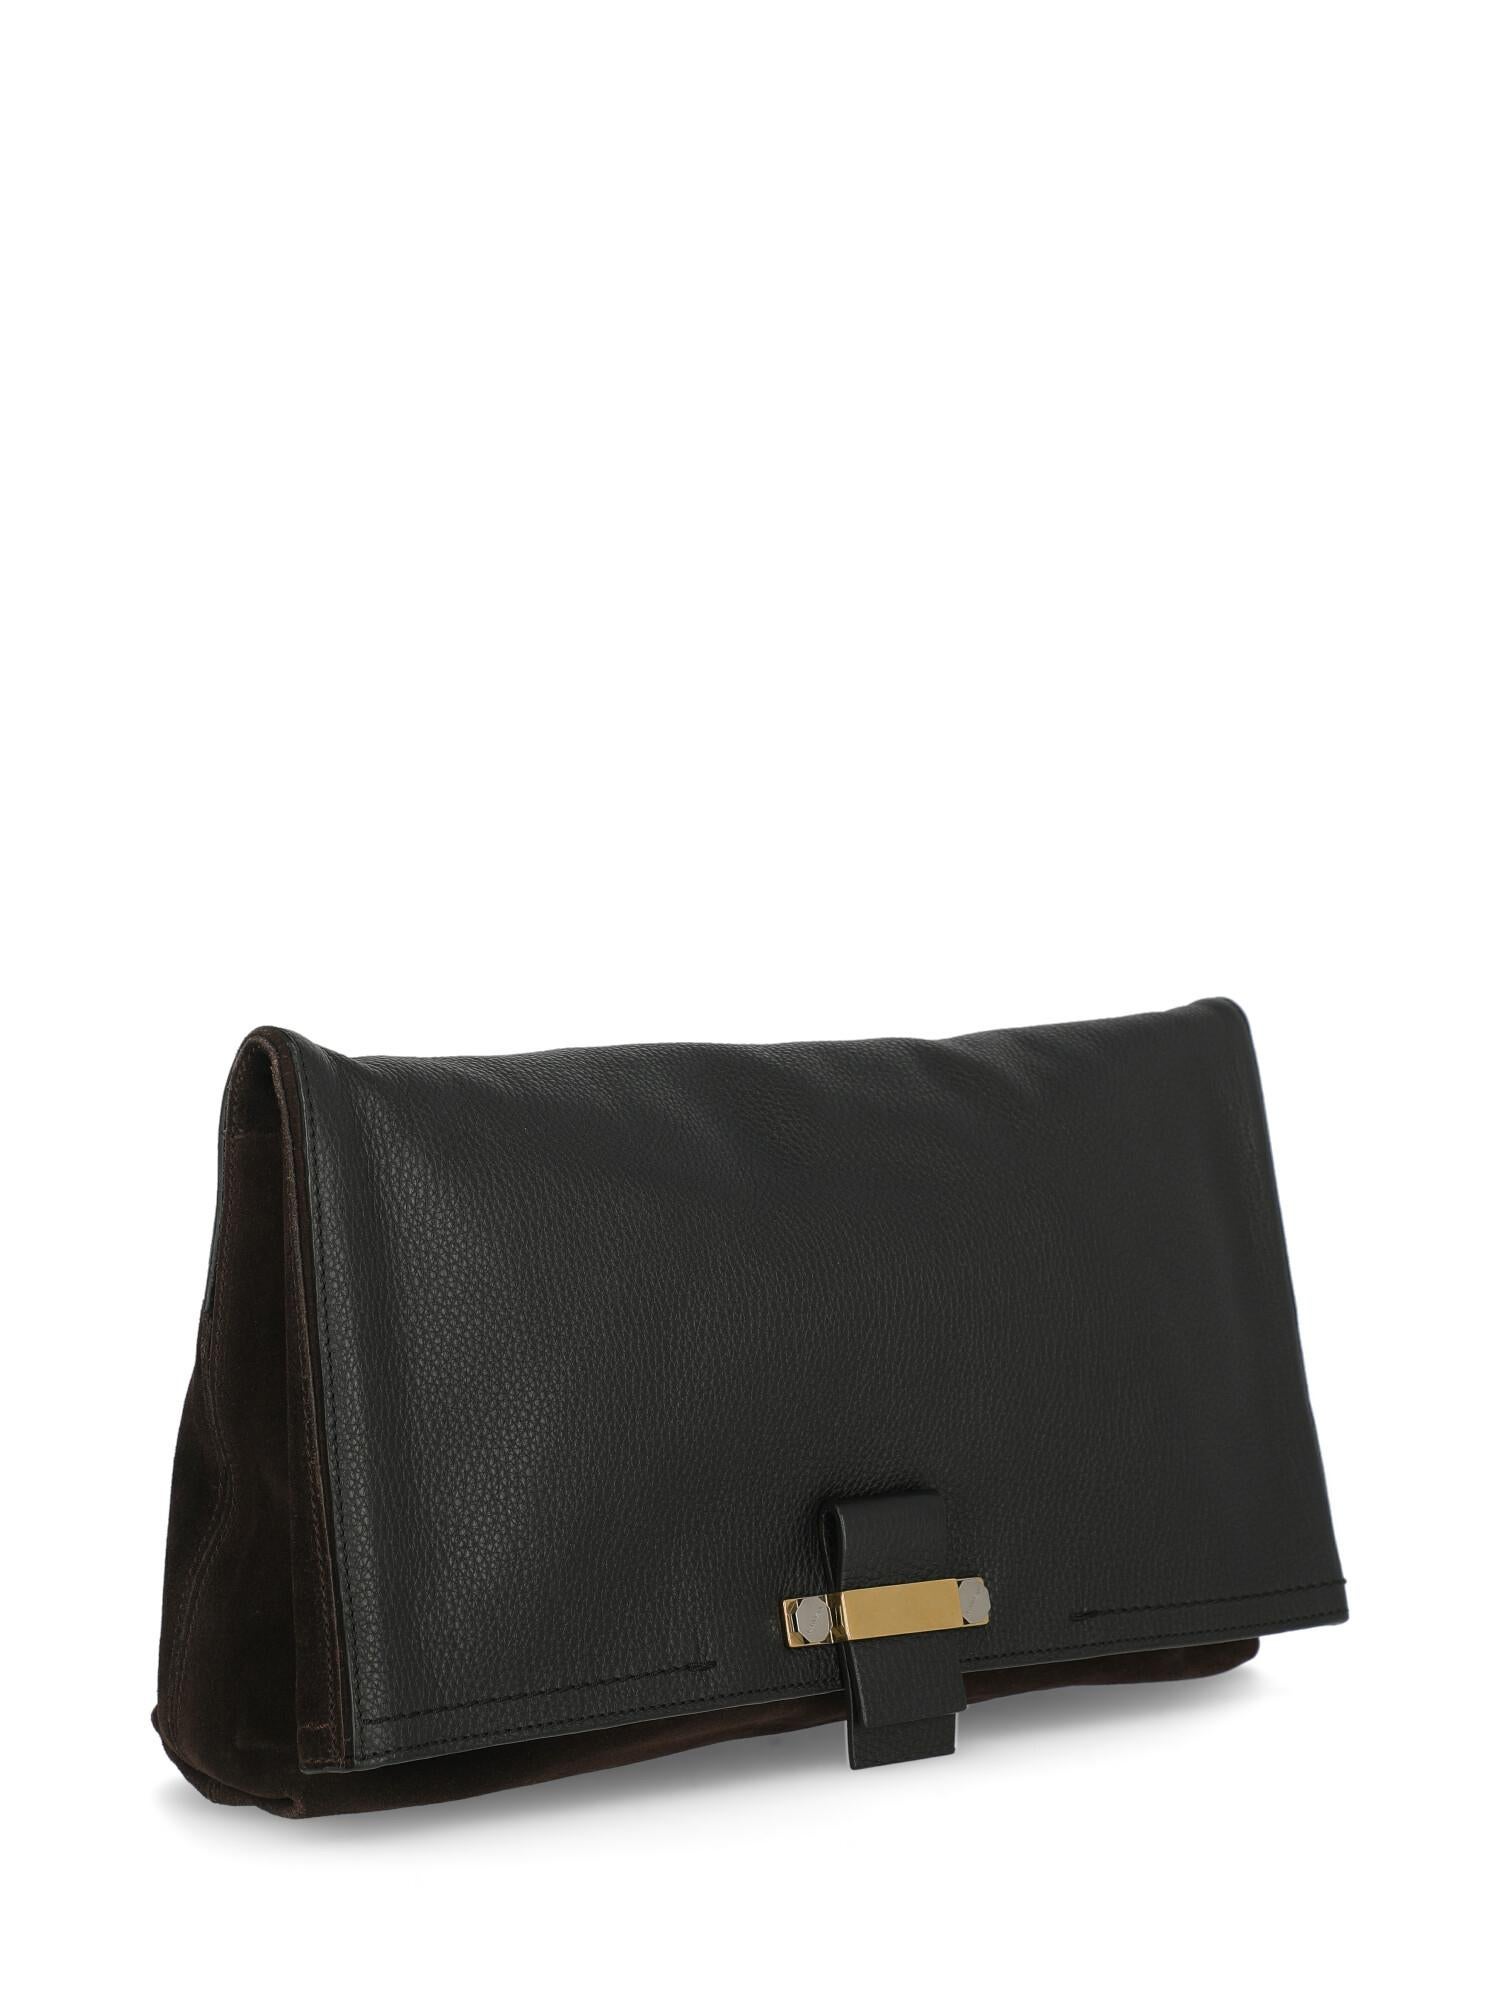 Black Lanvin Woman Handbag  Brown Leather For Sale